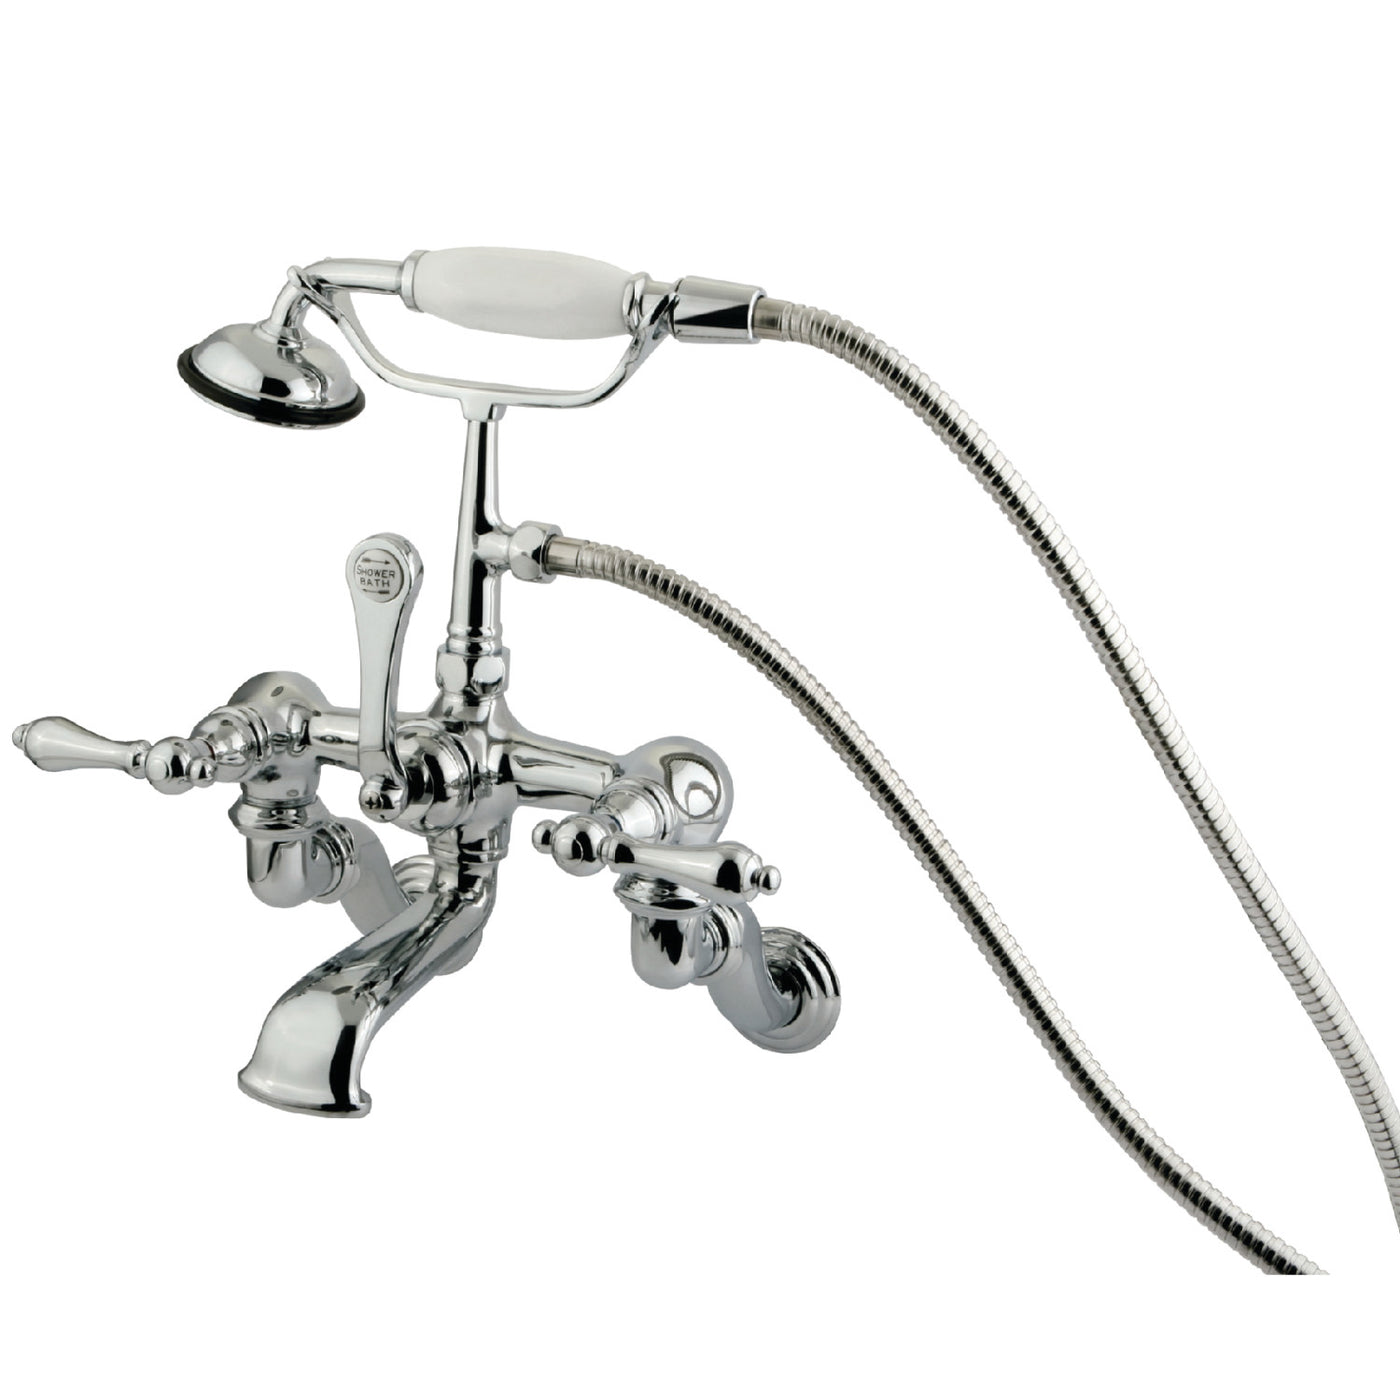 Elements of Design DT4581AL Adjustable Center Wall Mount Tub Faucet with Hand Shower, Polished Chrome